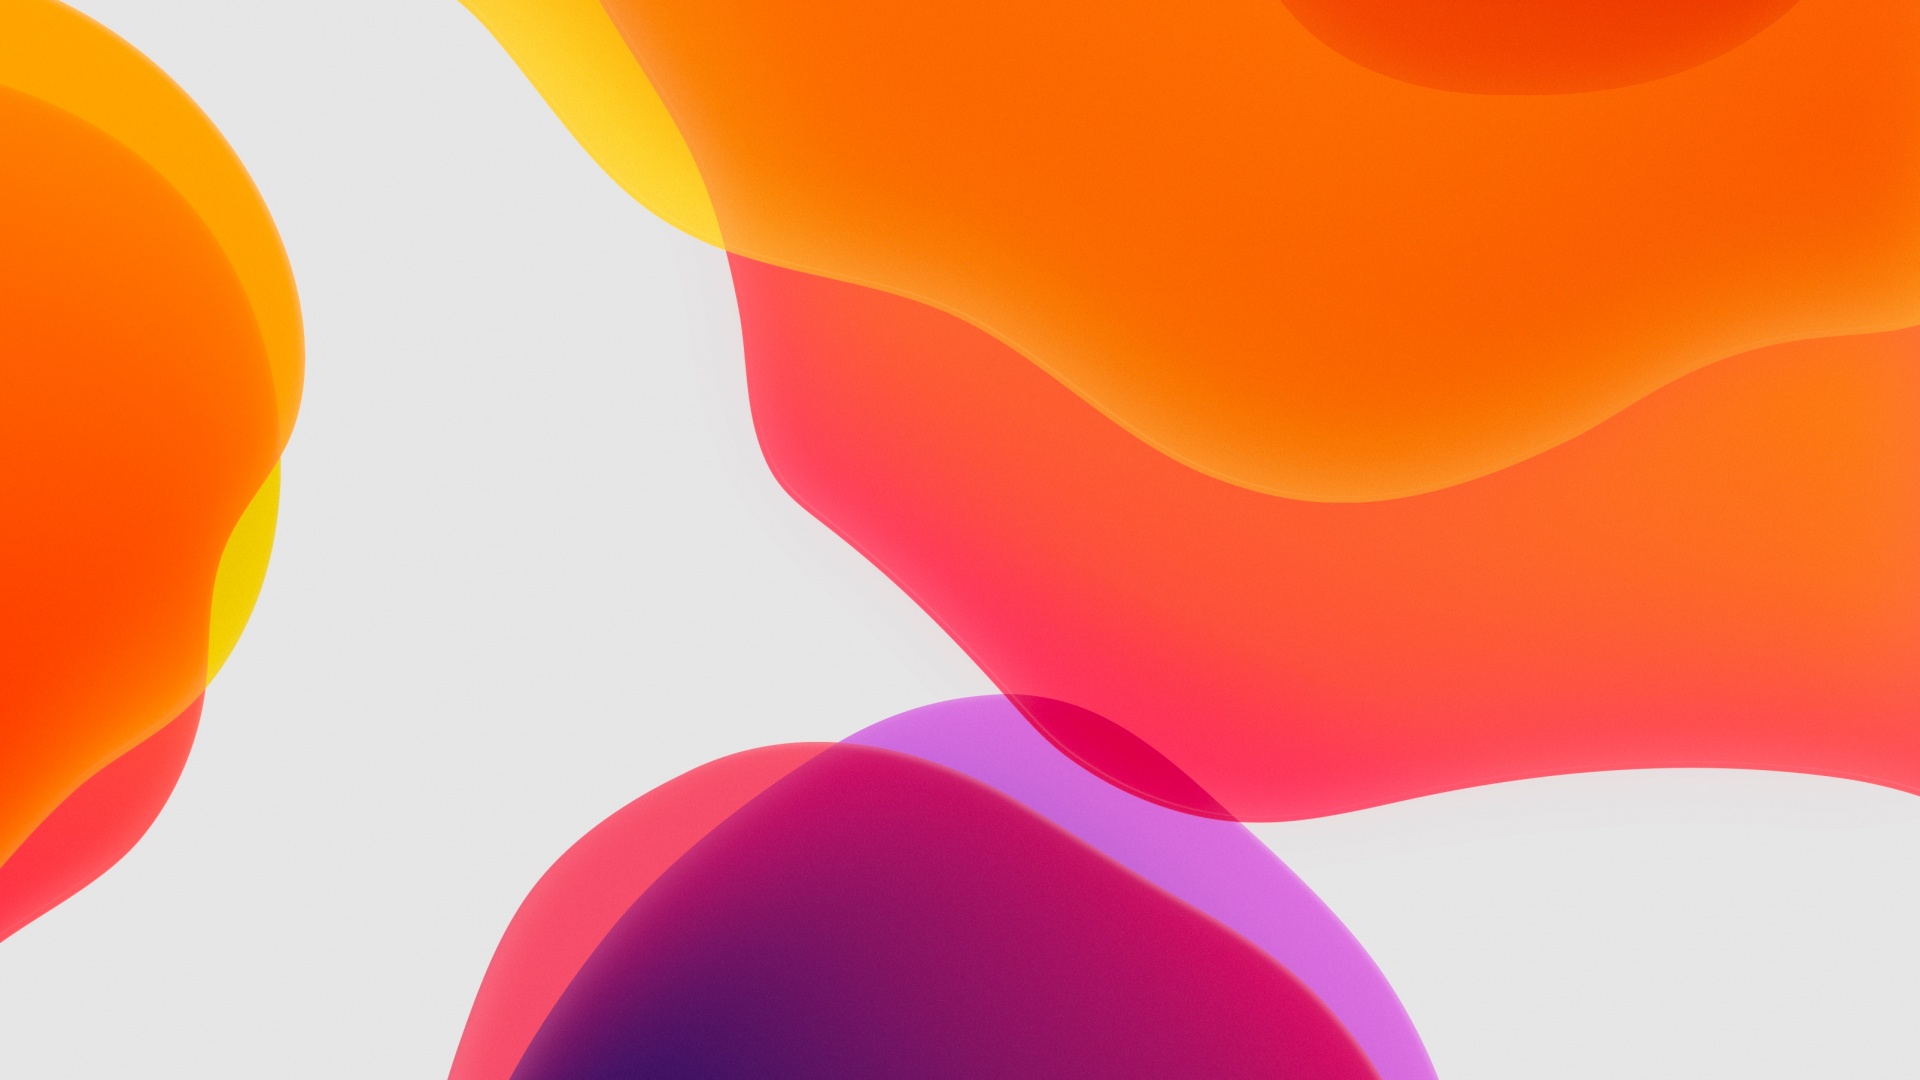 iPadOS Wallpaper 4K, Stock, Orange, White background